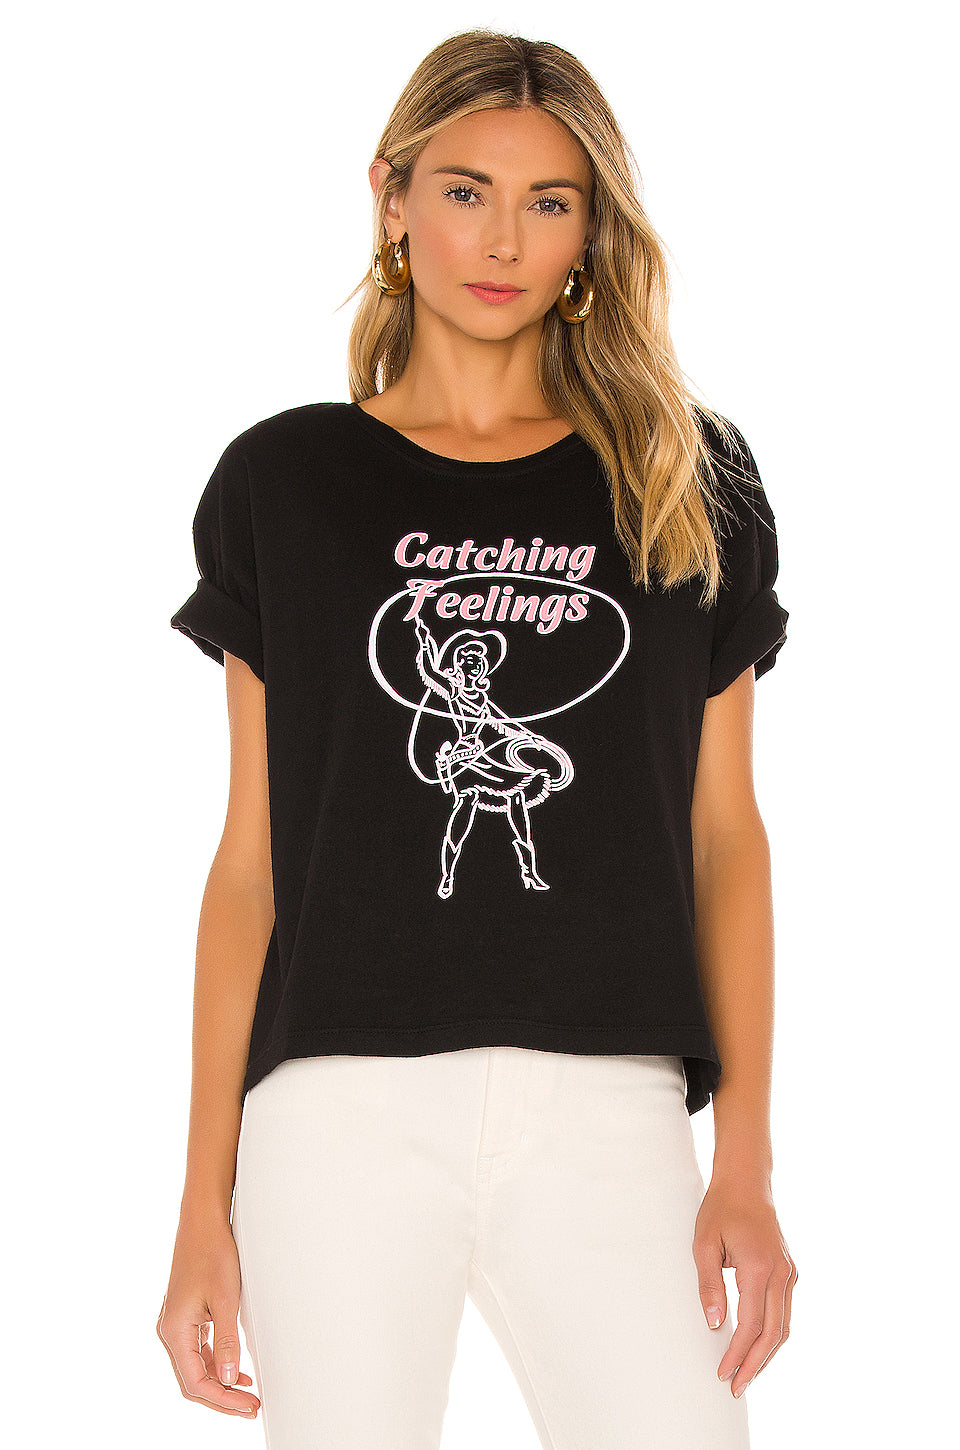 Cypress Tee Shirt in CATCHING FEELINGS